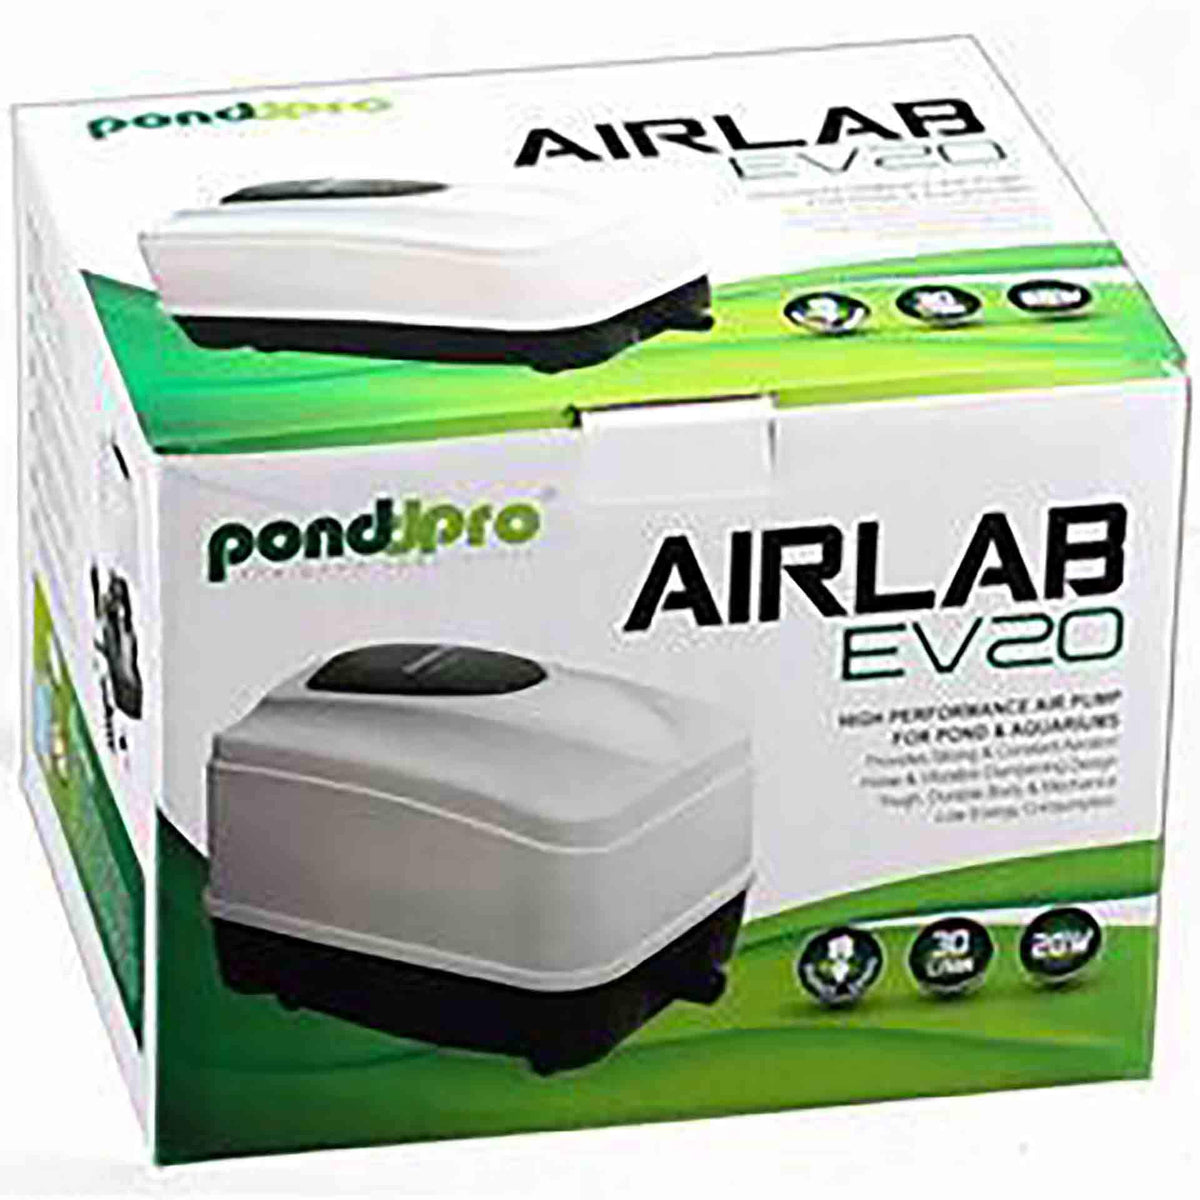 Pondpro Airlab EV20